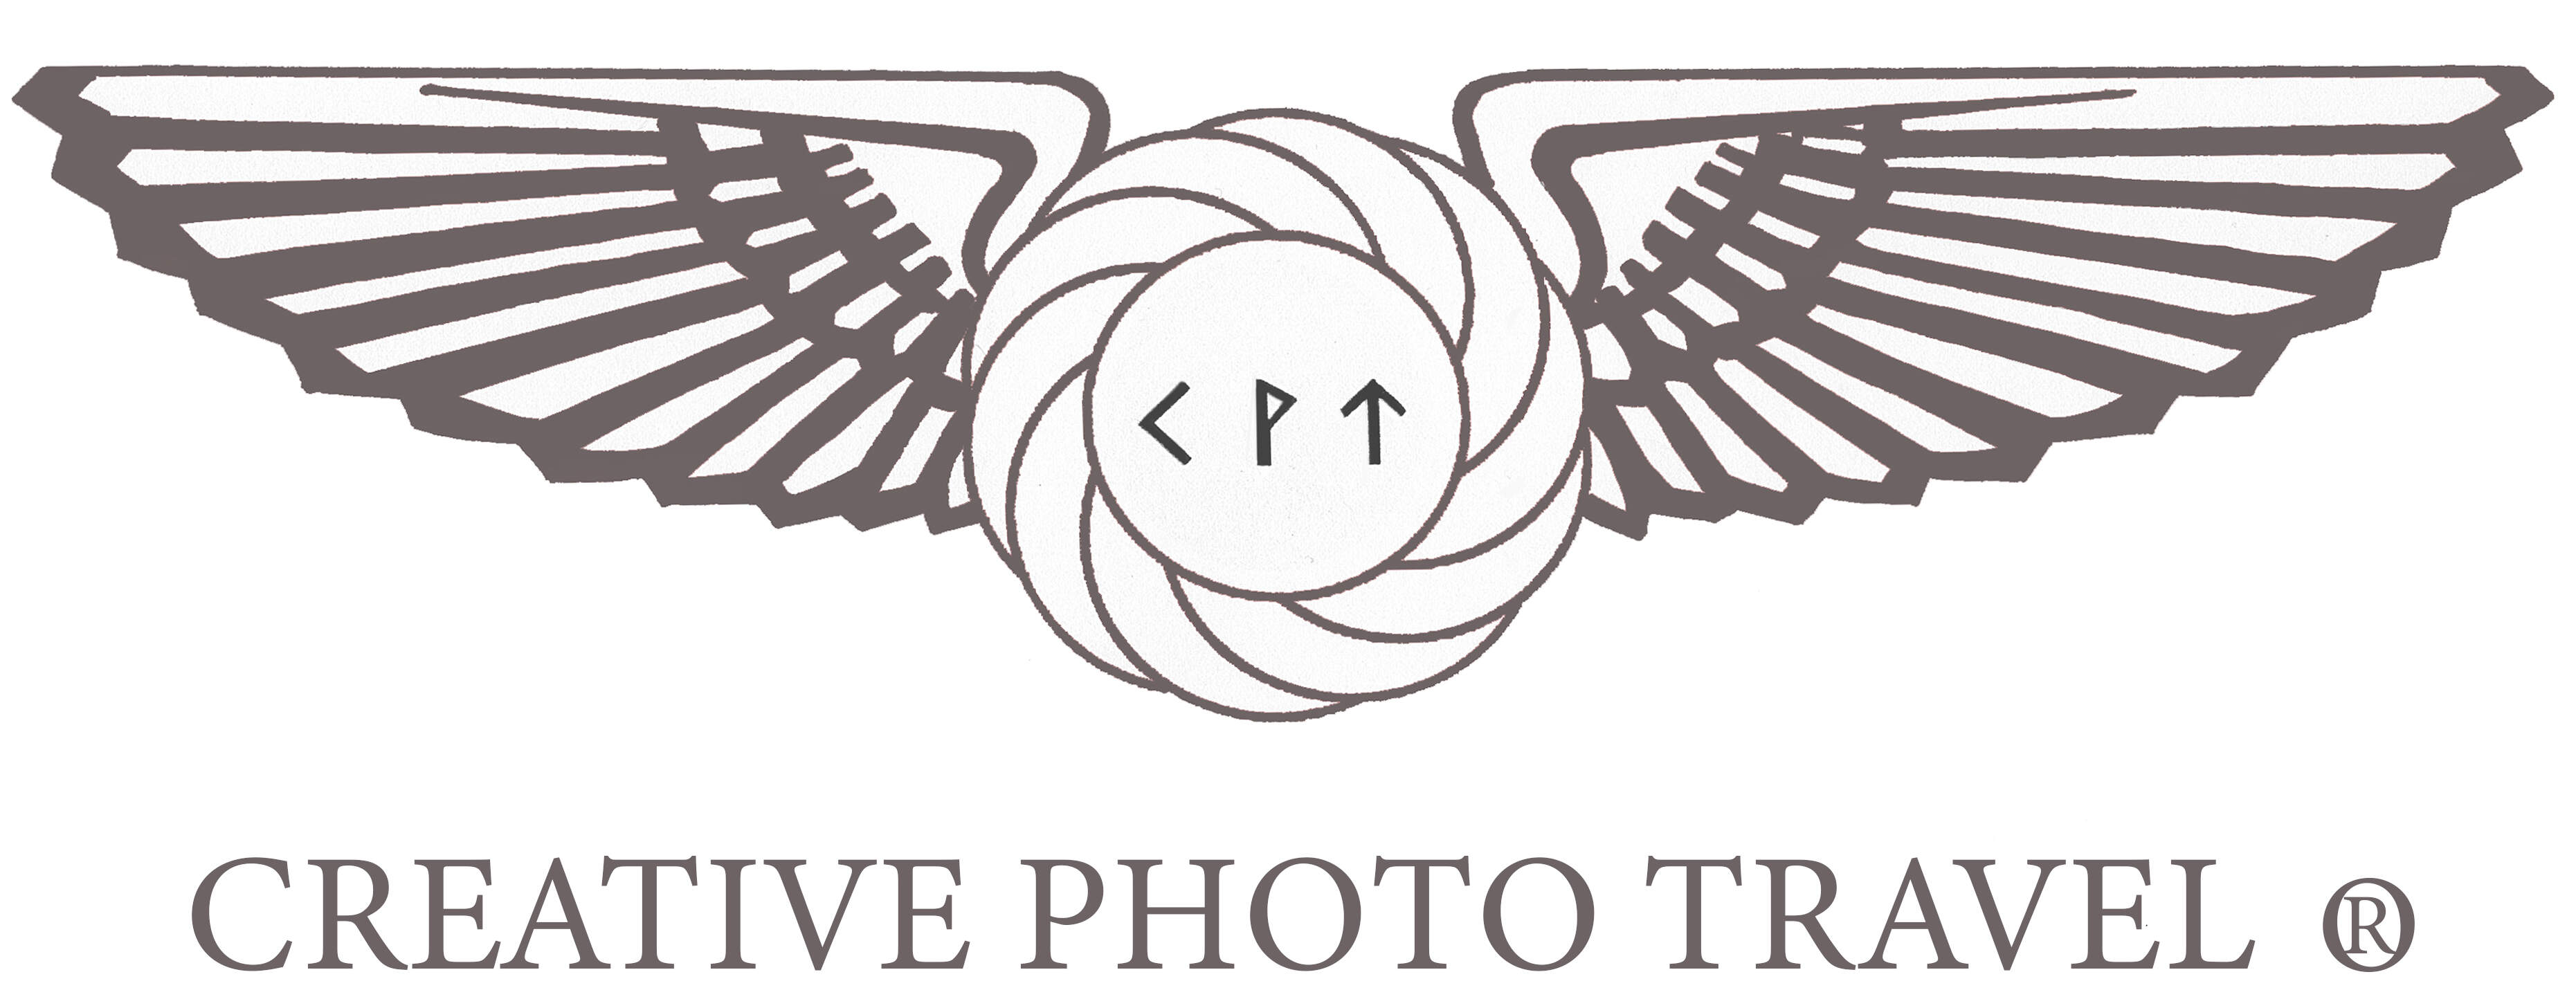 <img src="Creative Photo Travel logo".jpg